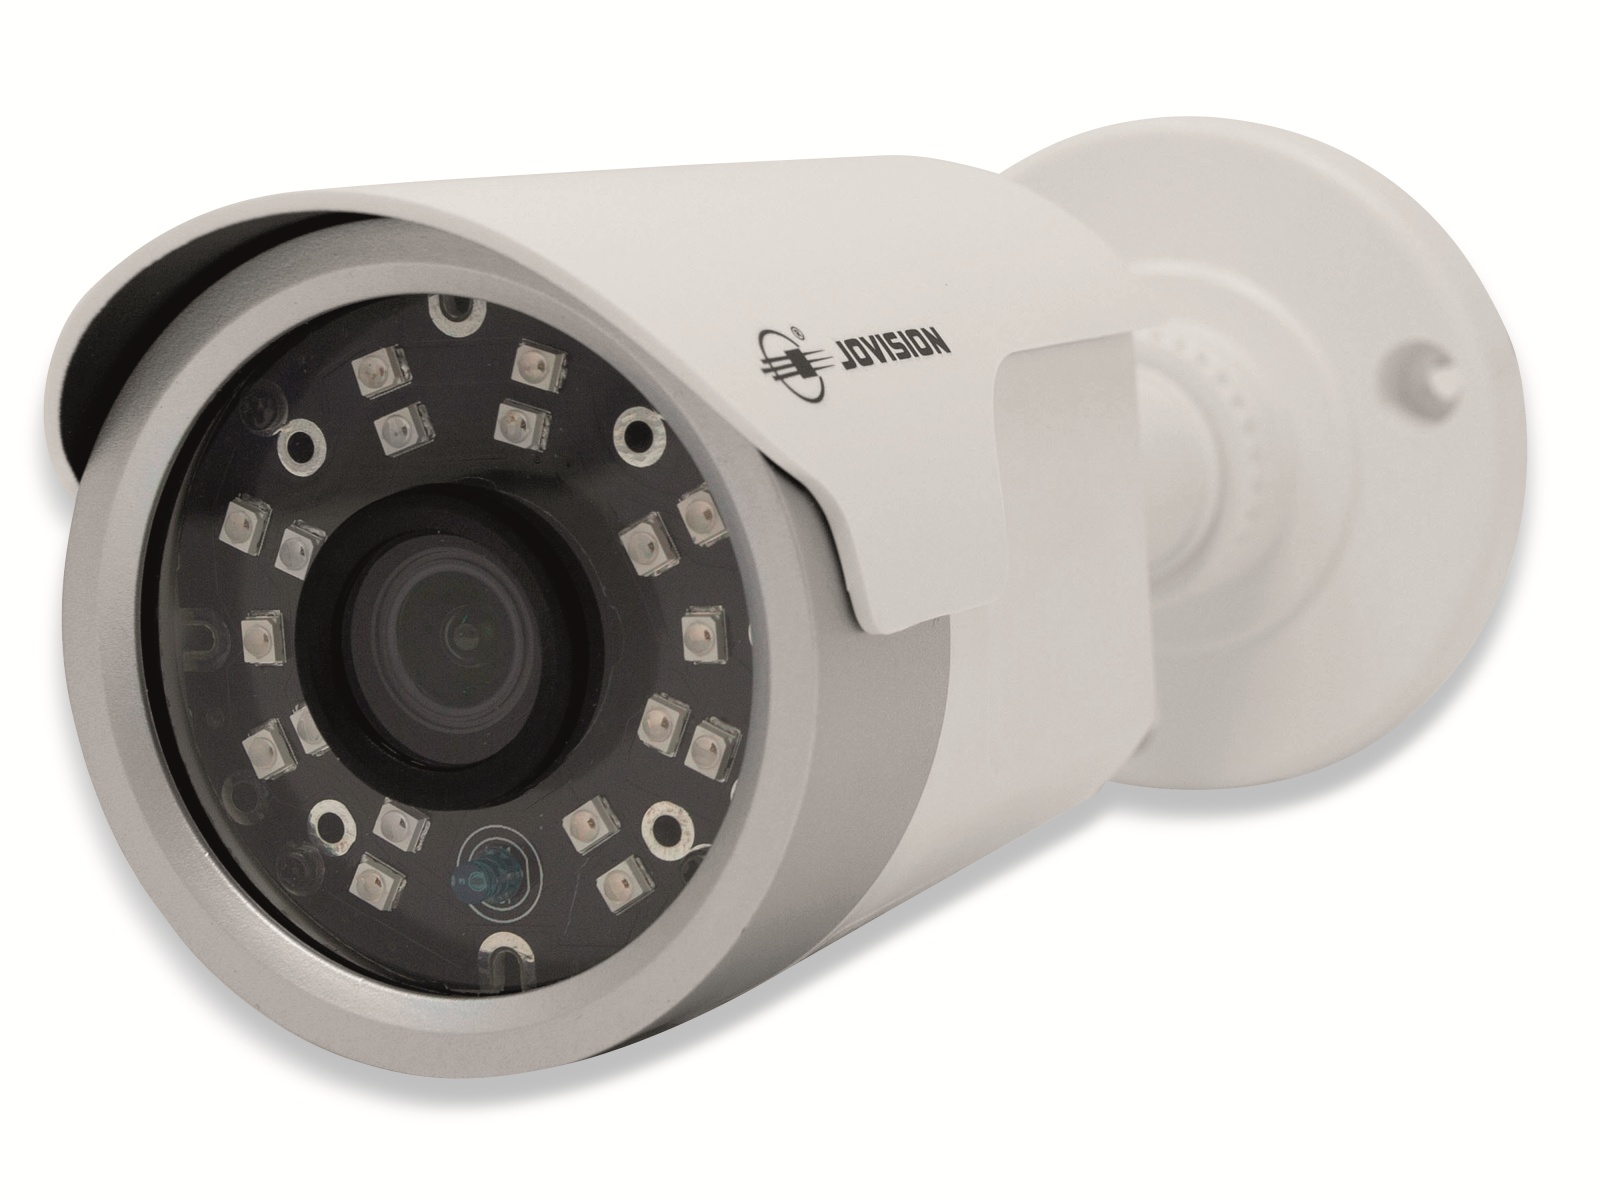 Jovision überwachungskamera CloudSEE IP-B21, POE, 2 MP, FullHD